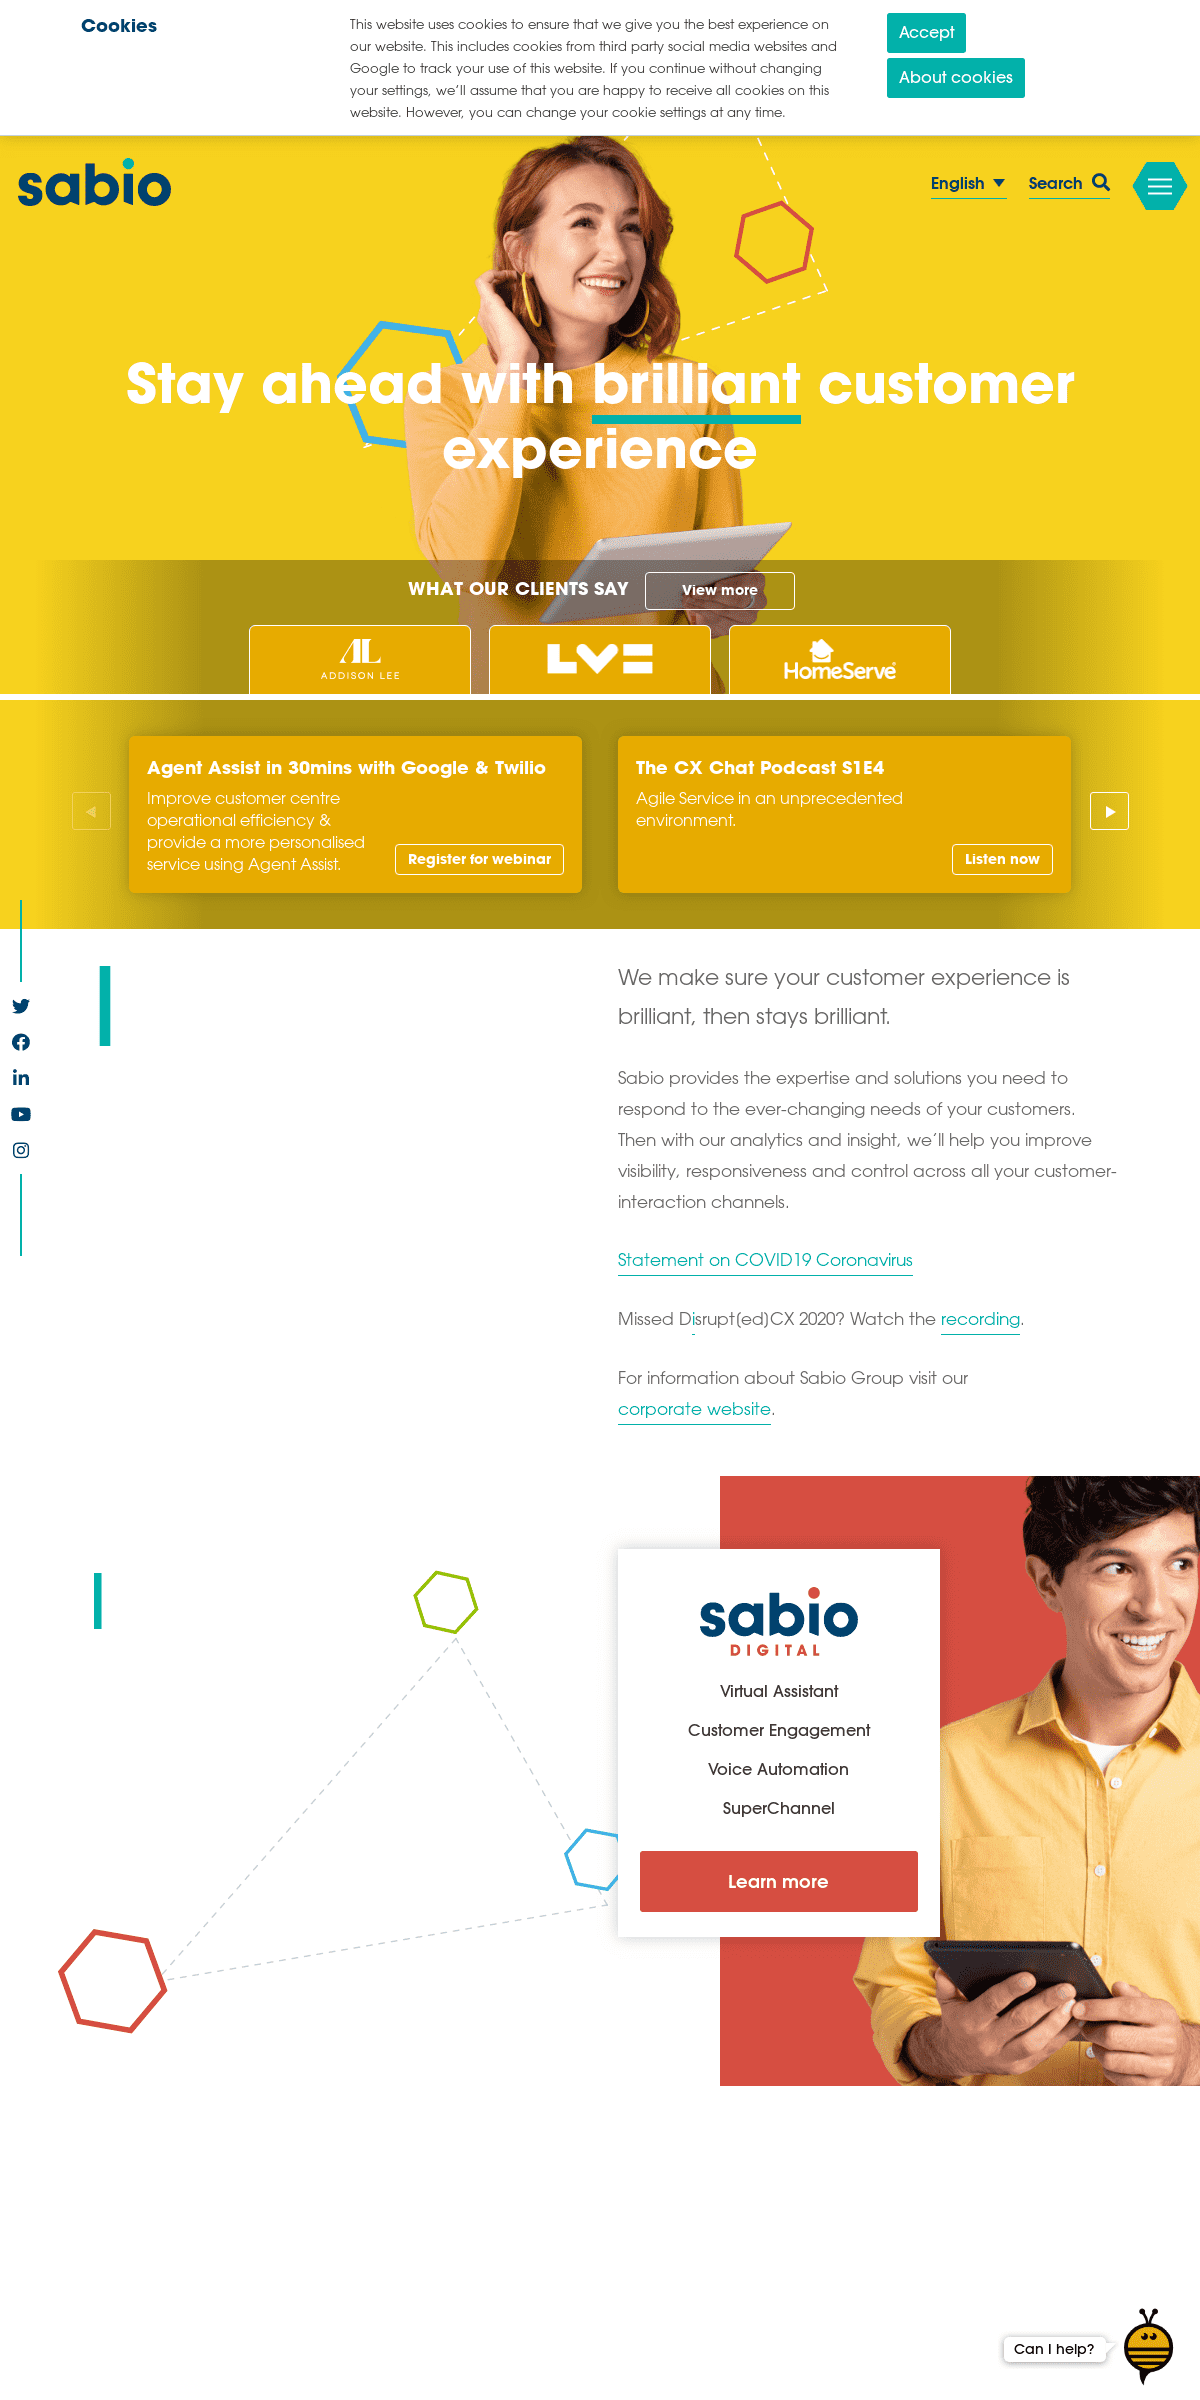 A complete backup of sabiogroup.com